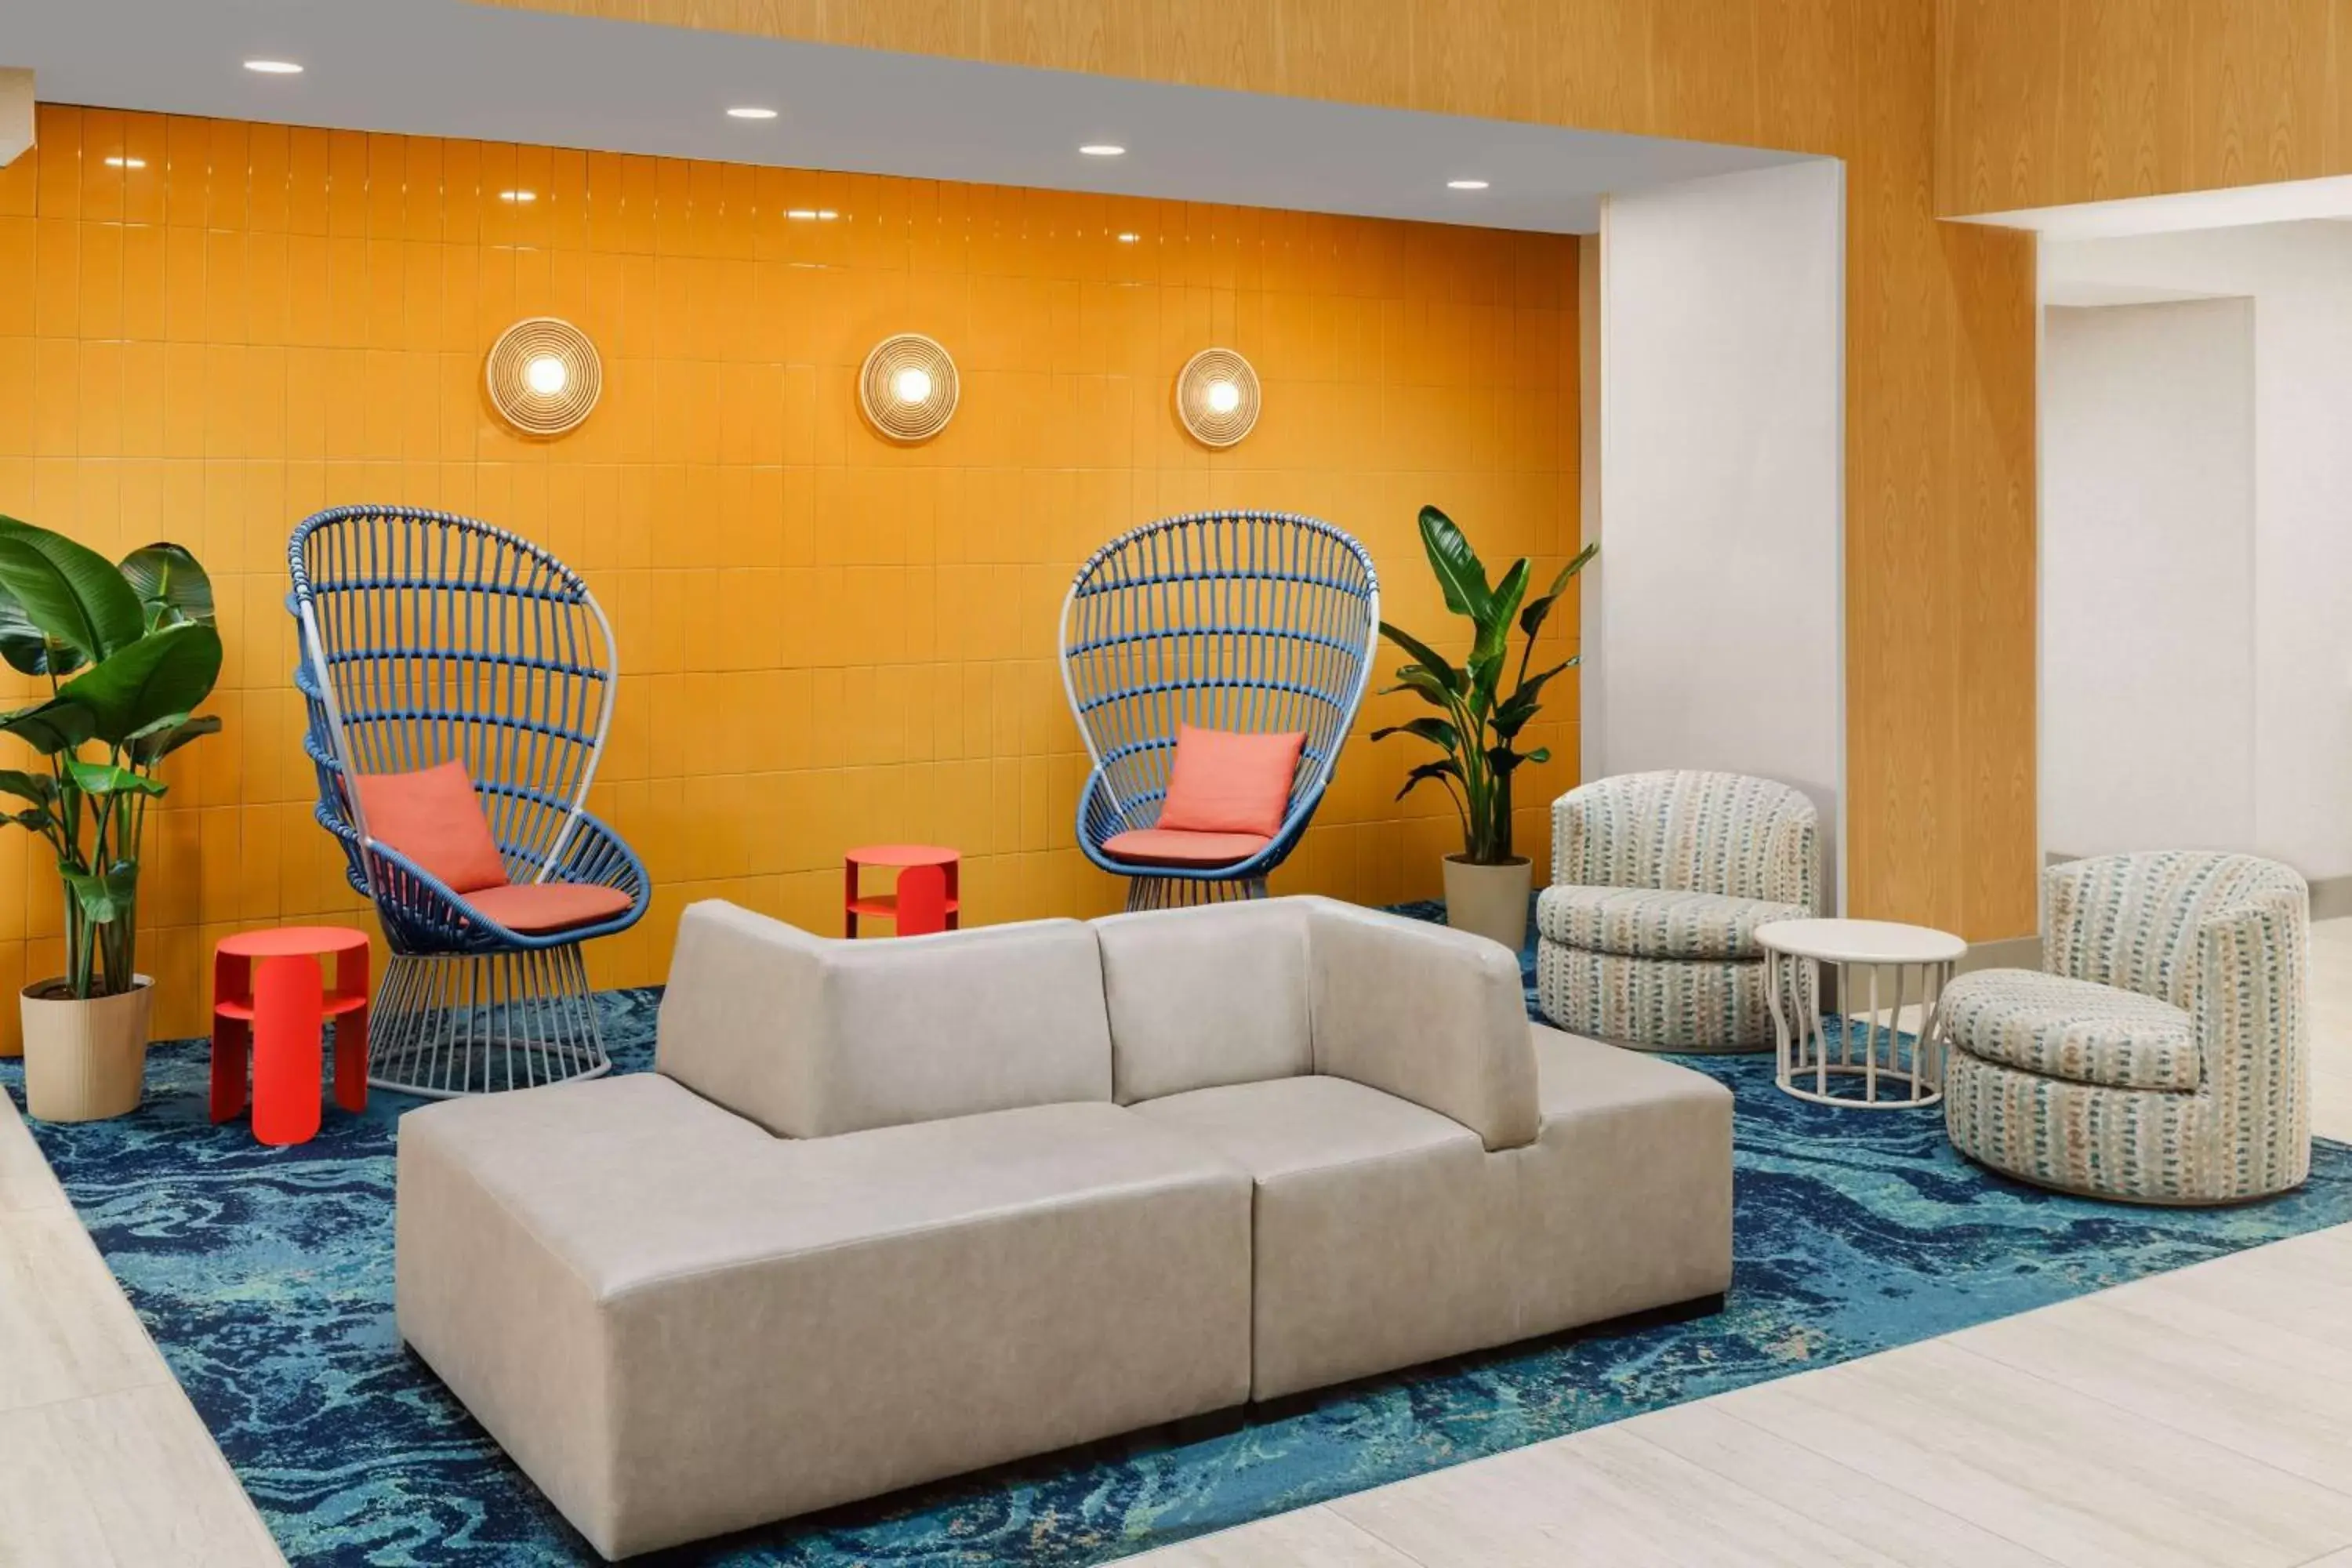 Lobby or reception in Hyatt Place across from Universal Orlando Resort